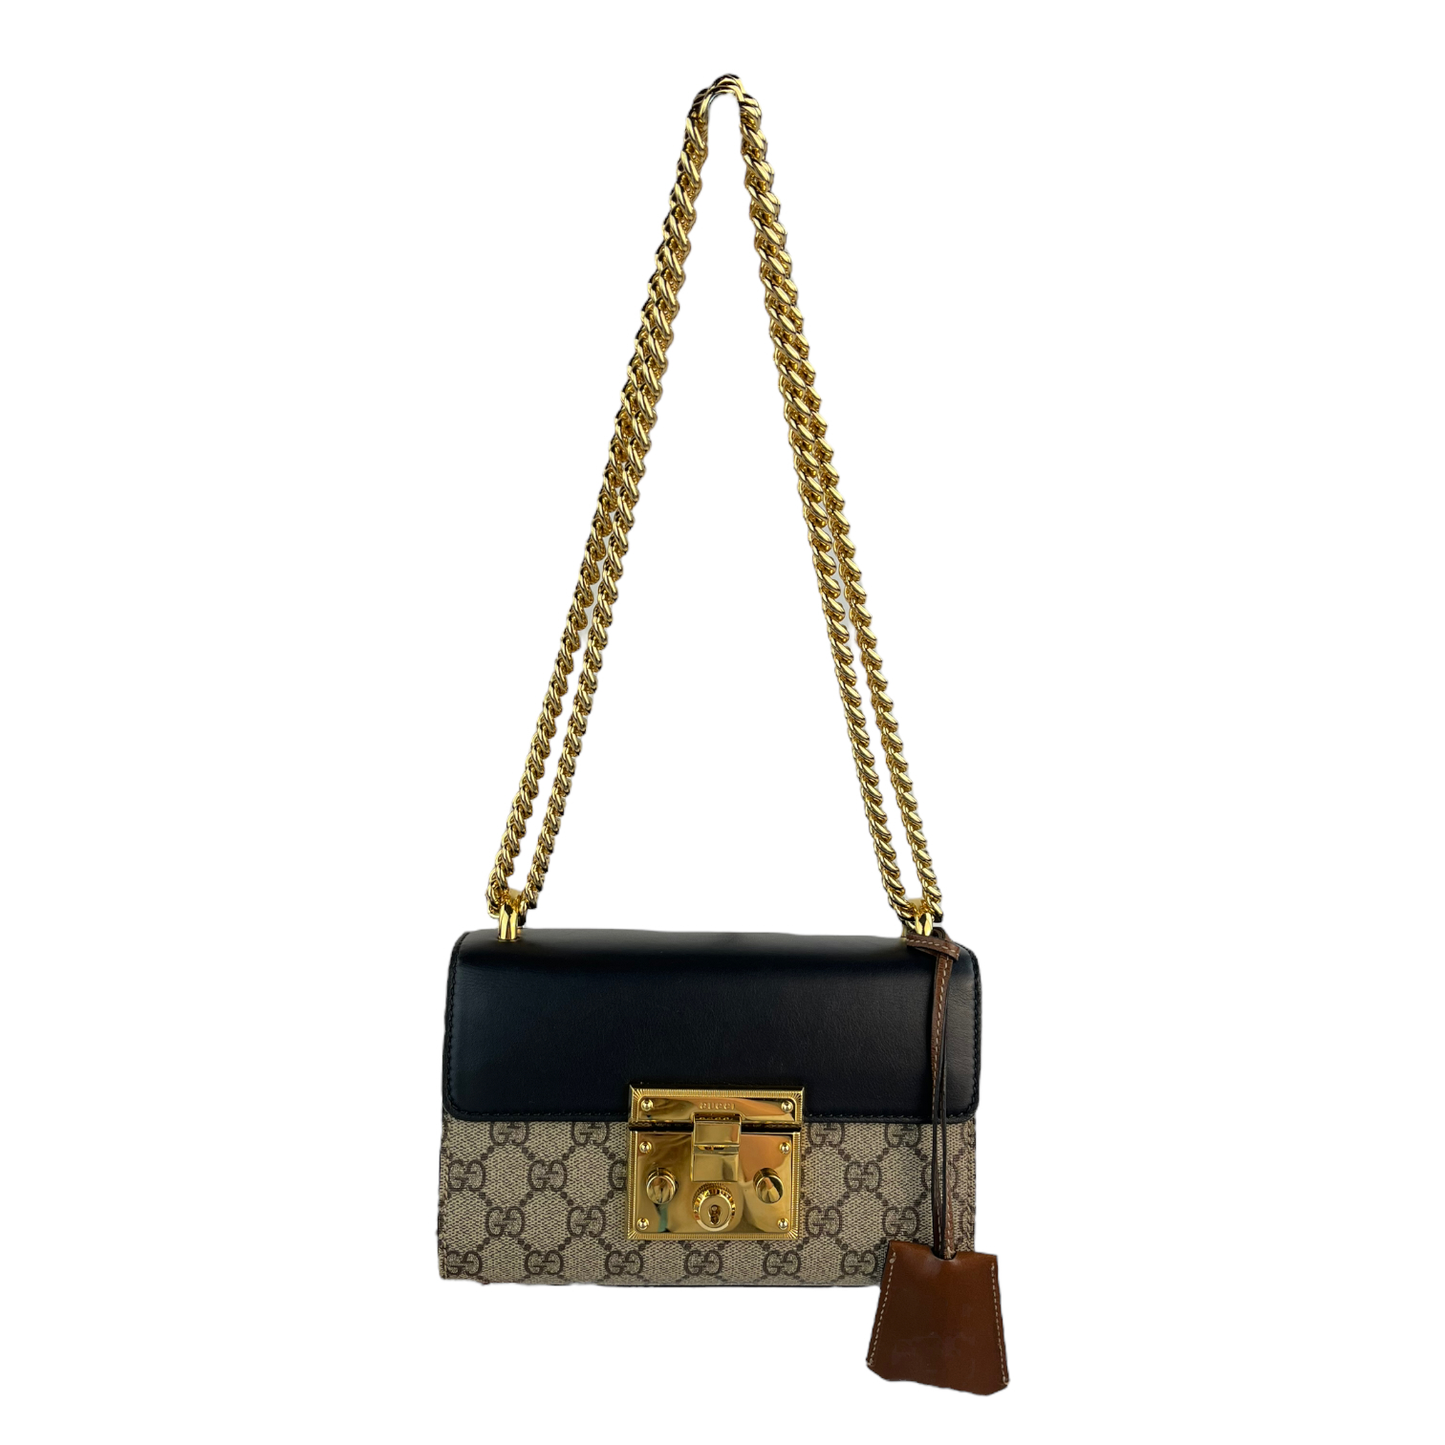 Gucci Padlock Small Chain Bag